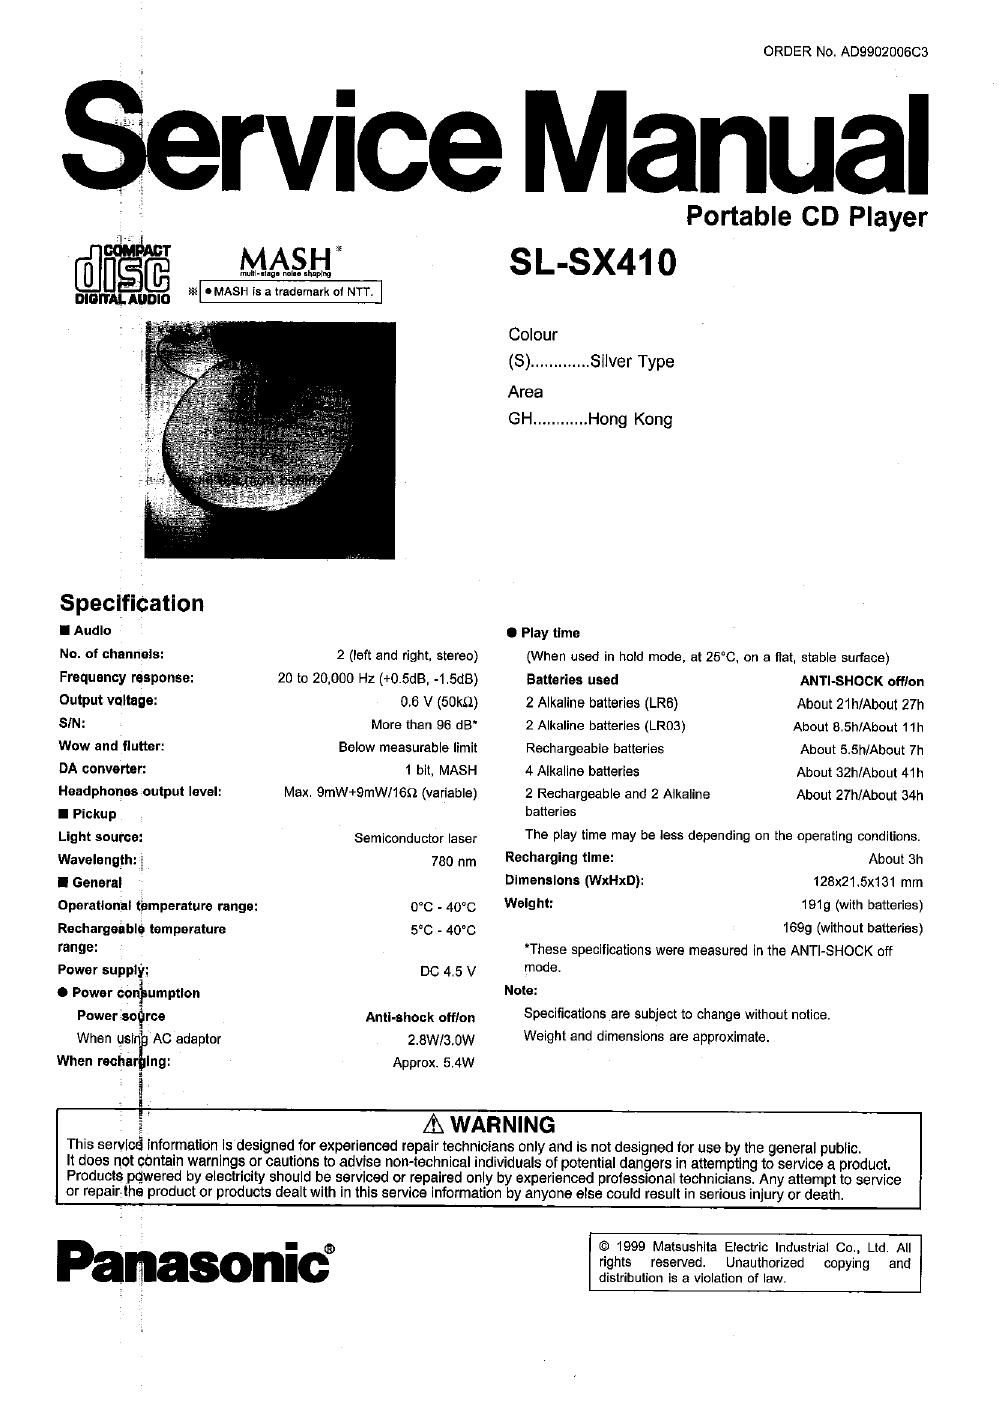 panasonic sl sx 410 service manual